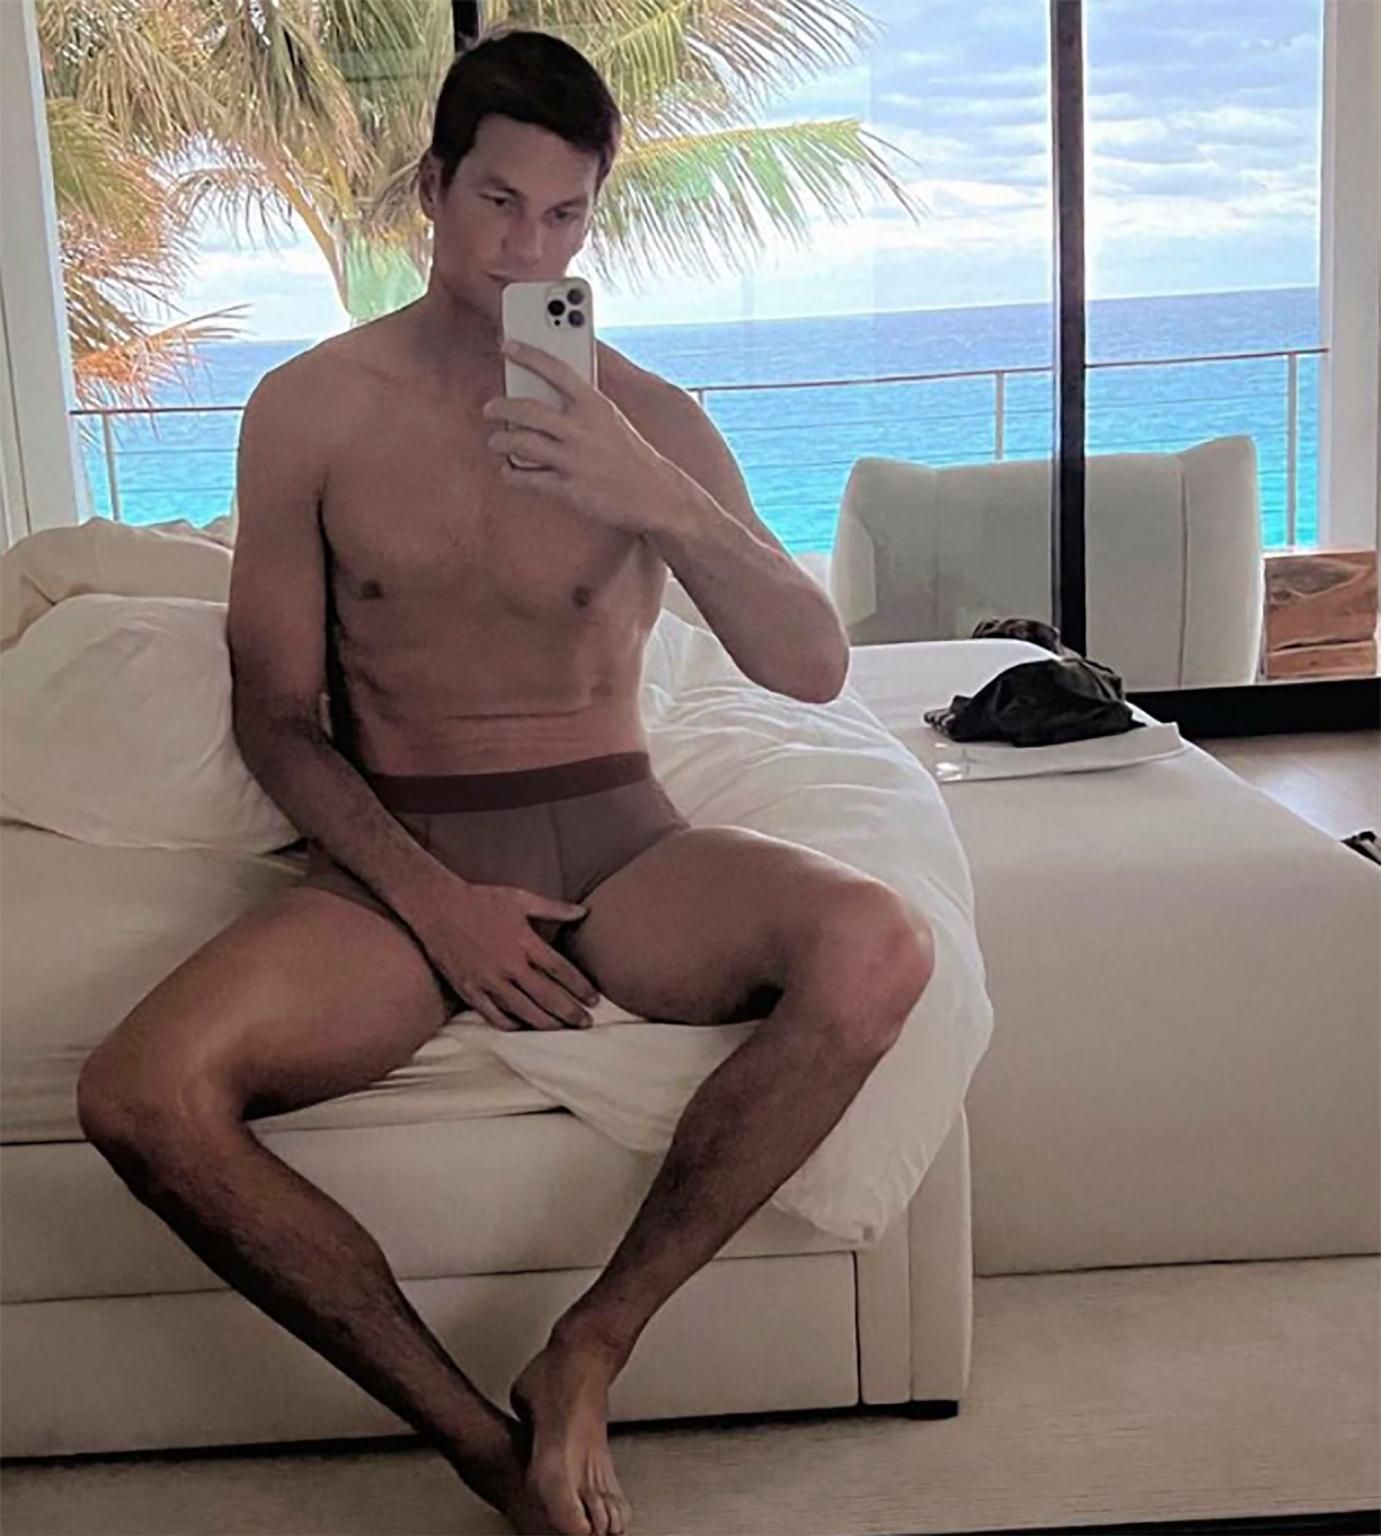 Tom Brady strips down for underwear selfie after NFL retirement